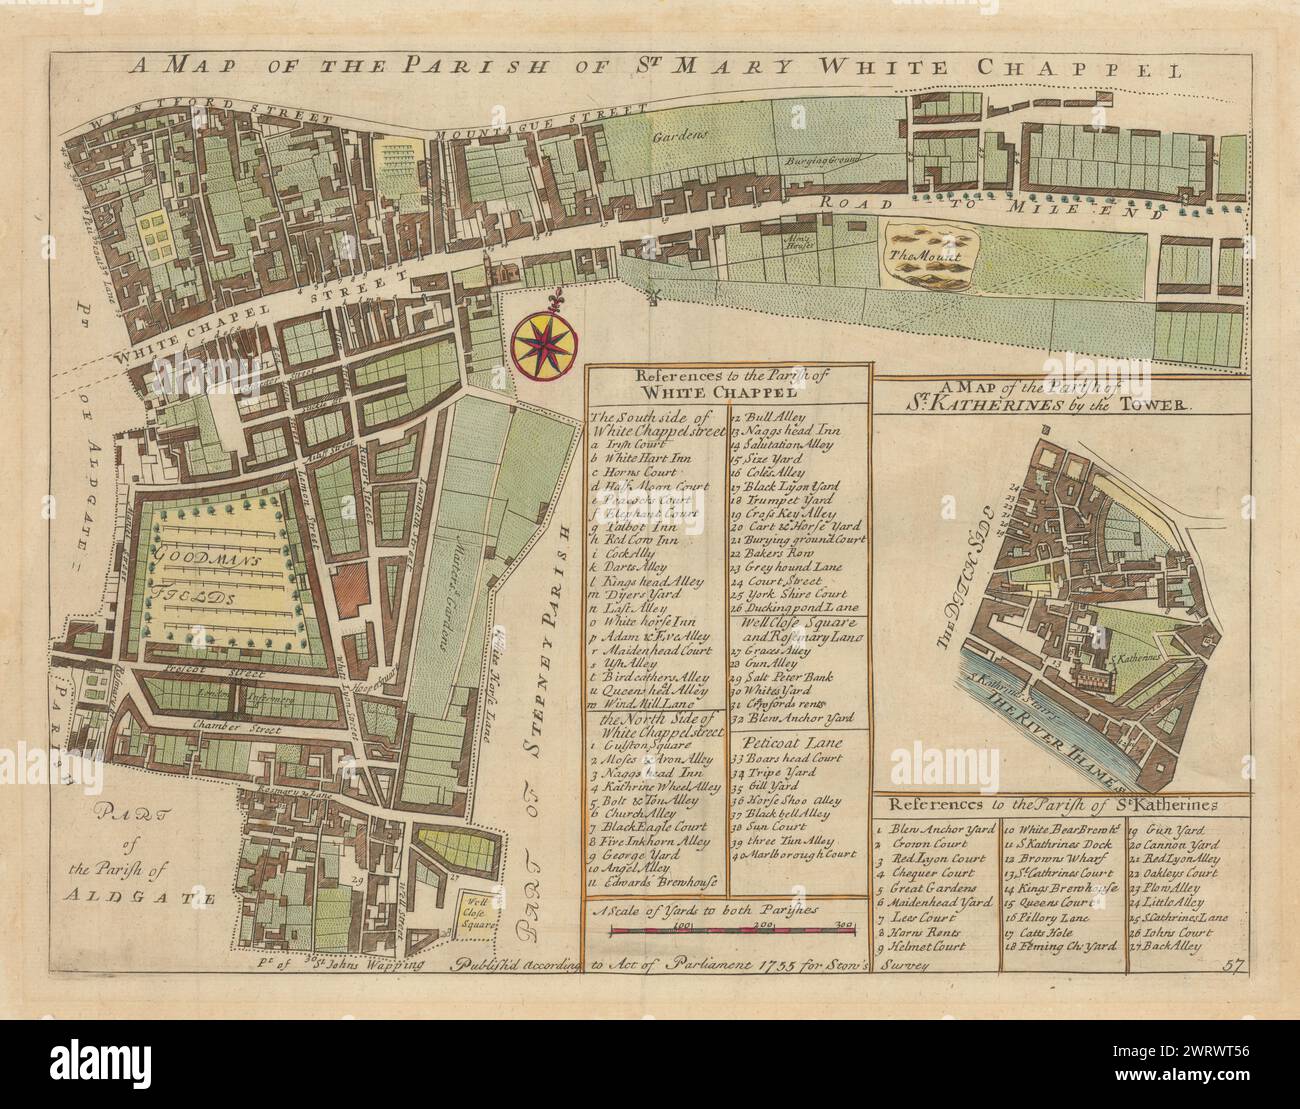 Parrocchie di St Mary, Whitechapel e St Katherine's/Tower. Mappa STIVAGGIO/STRYPE 1755 Foto Stock